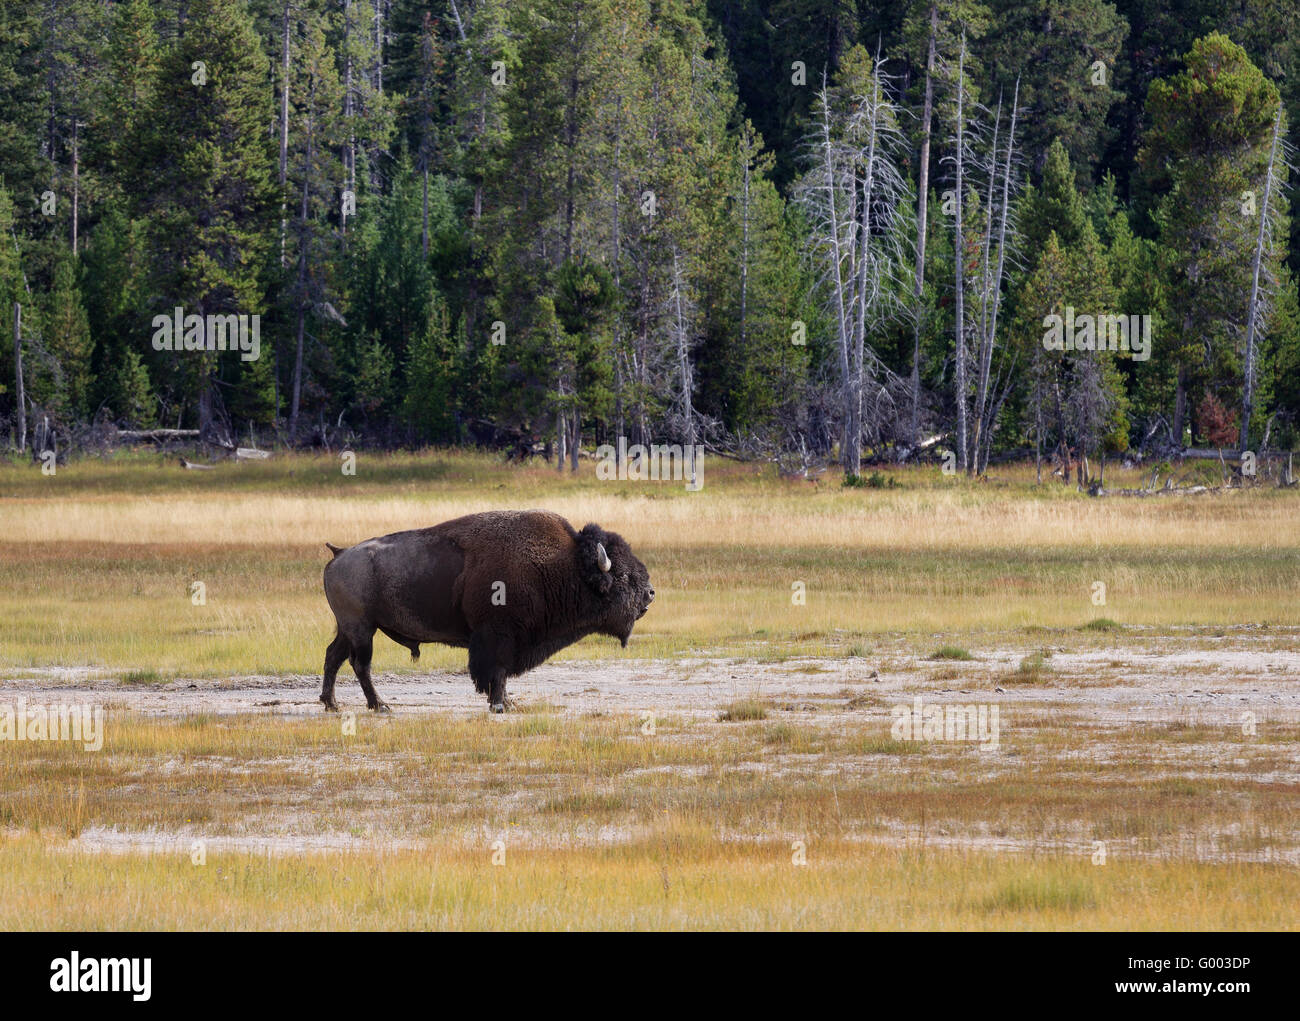 Senior North Amercian Bull Buffalo Stock Photo